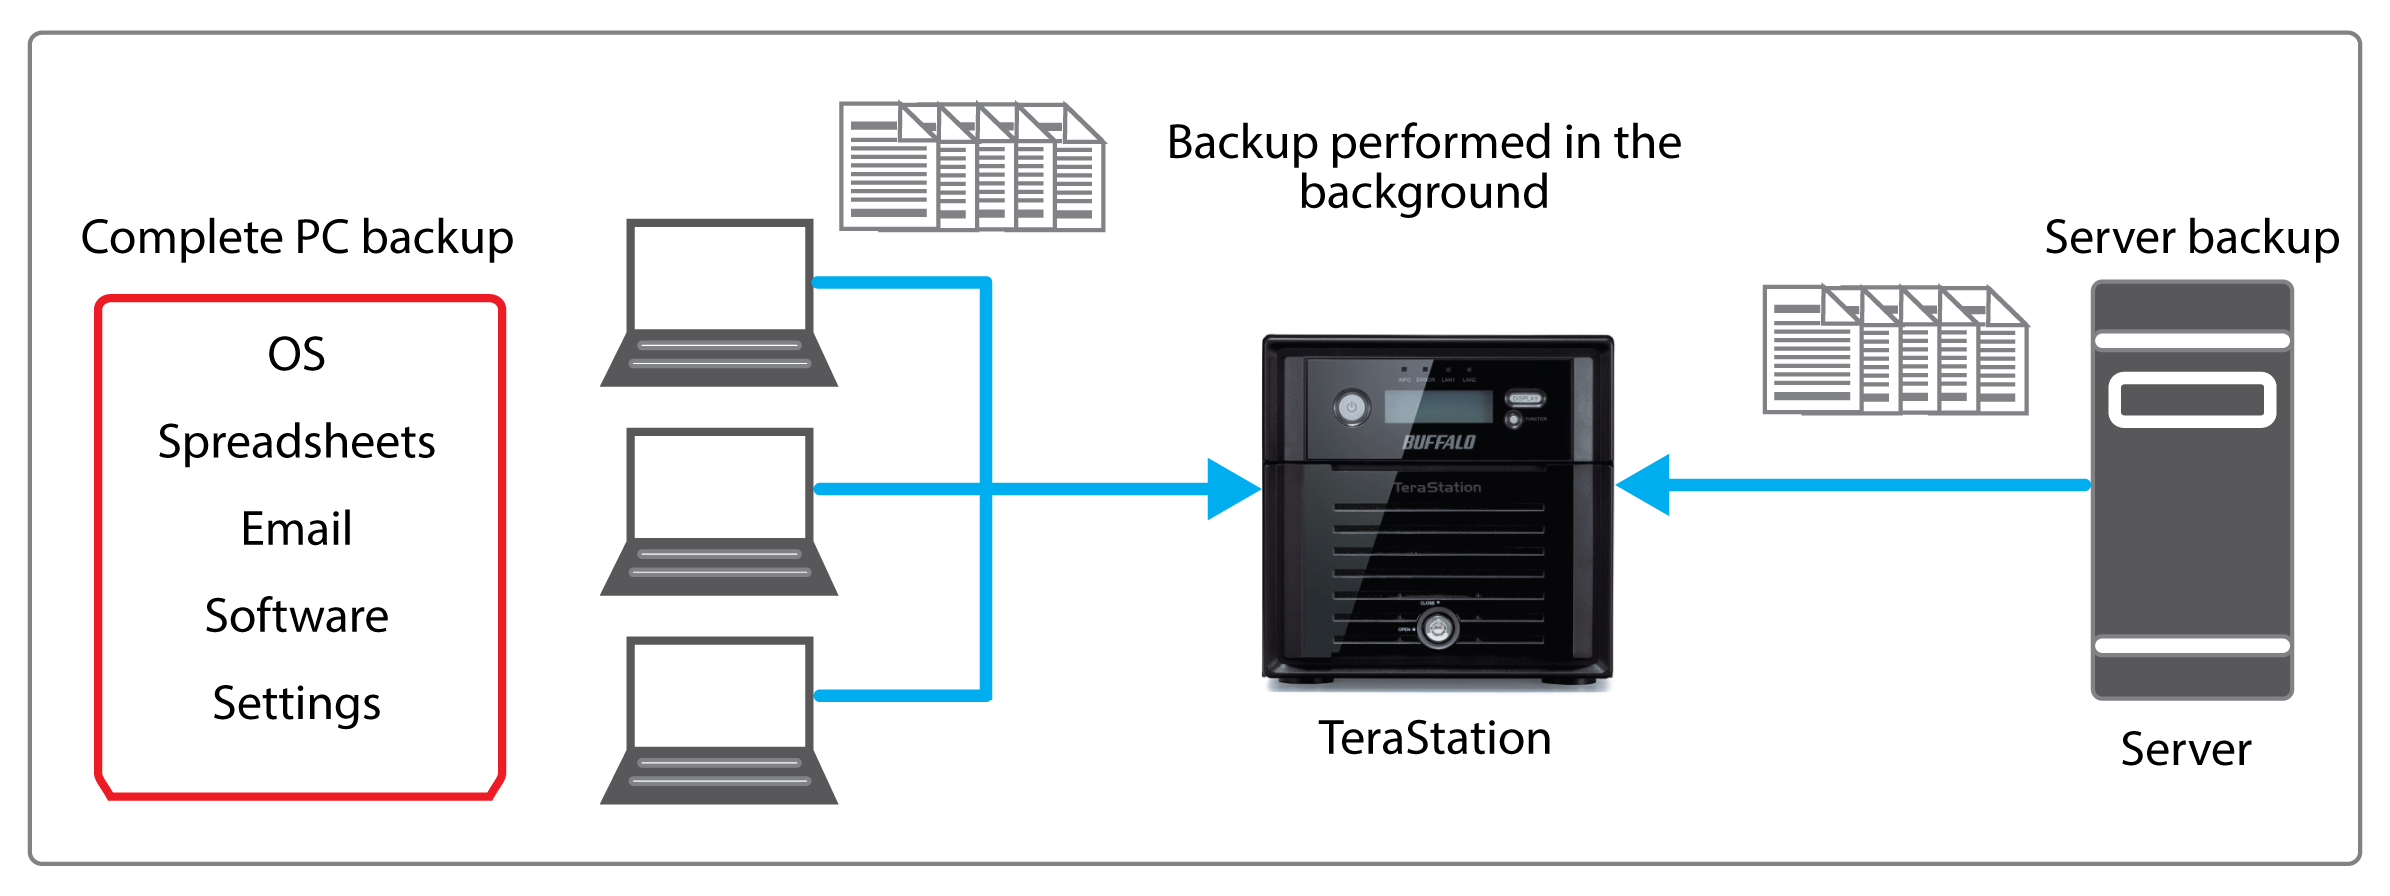 terastation 5000 data protection and backup